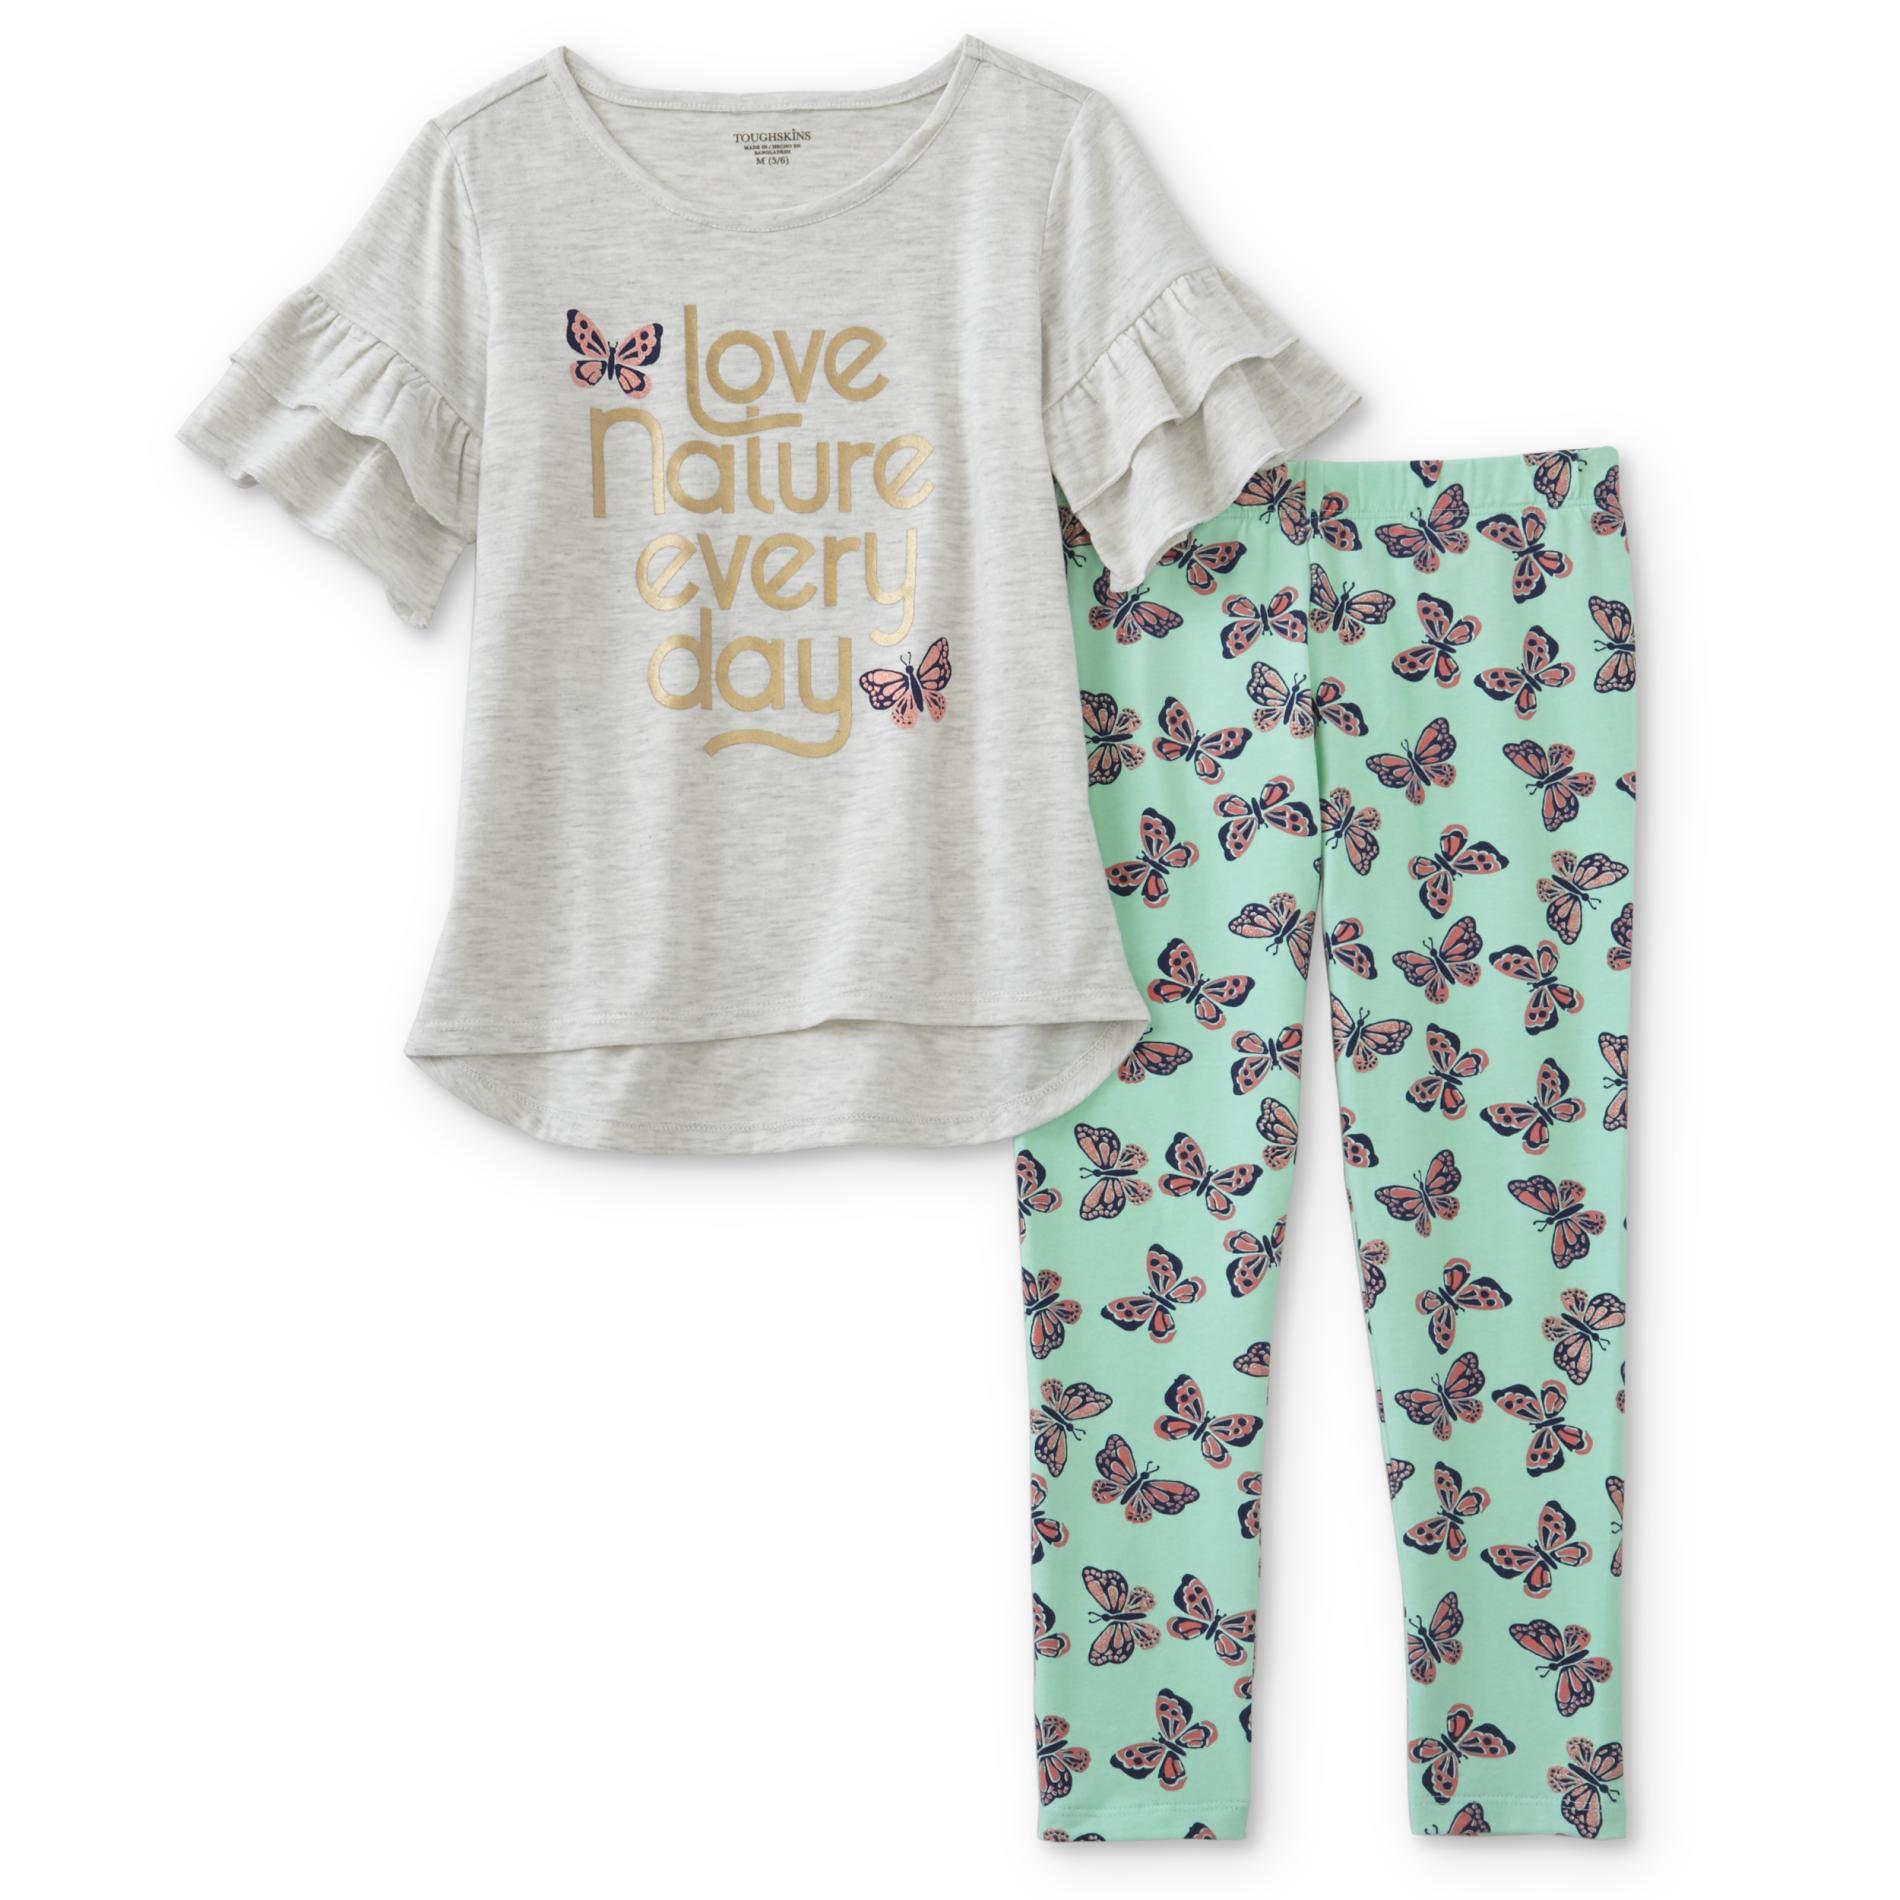 Toughskins Infant & Toddler Girls' Graphic T-Shirt & Leggings - Butterfly